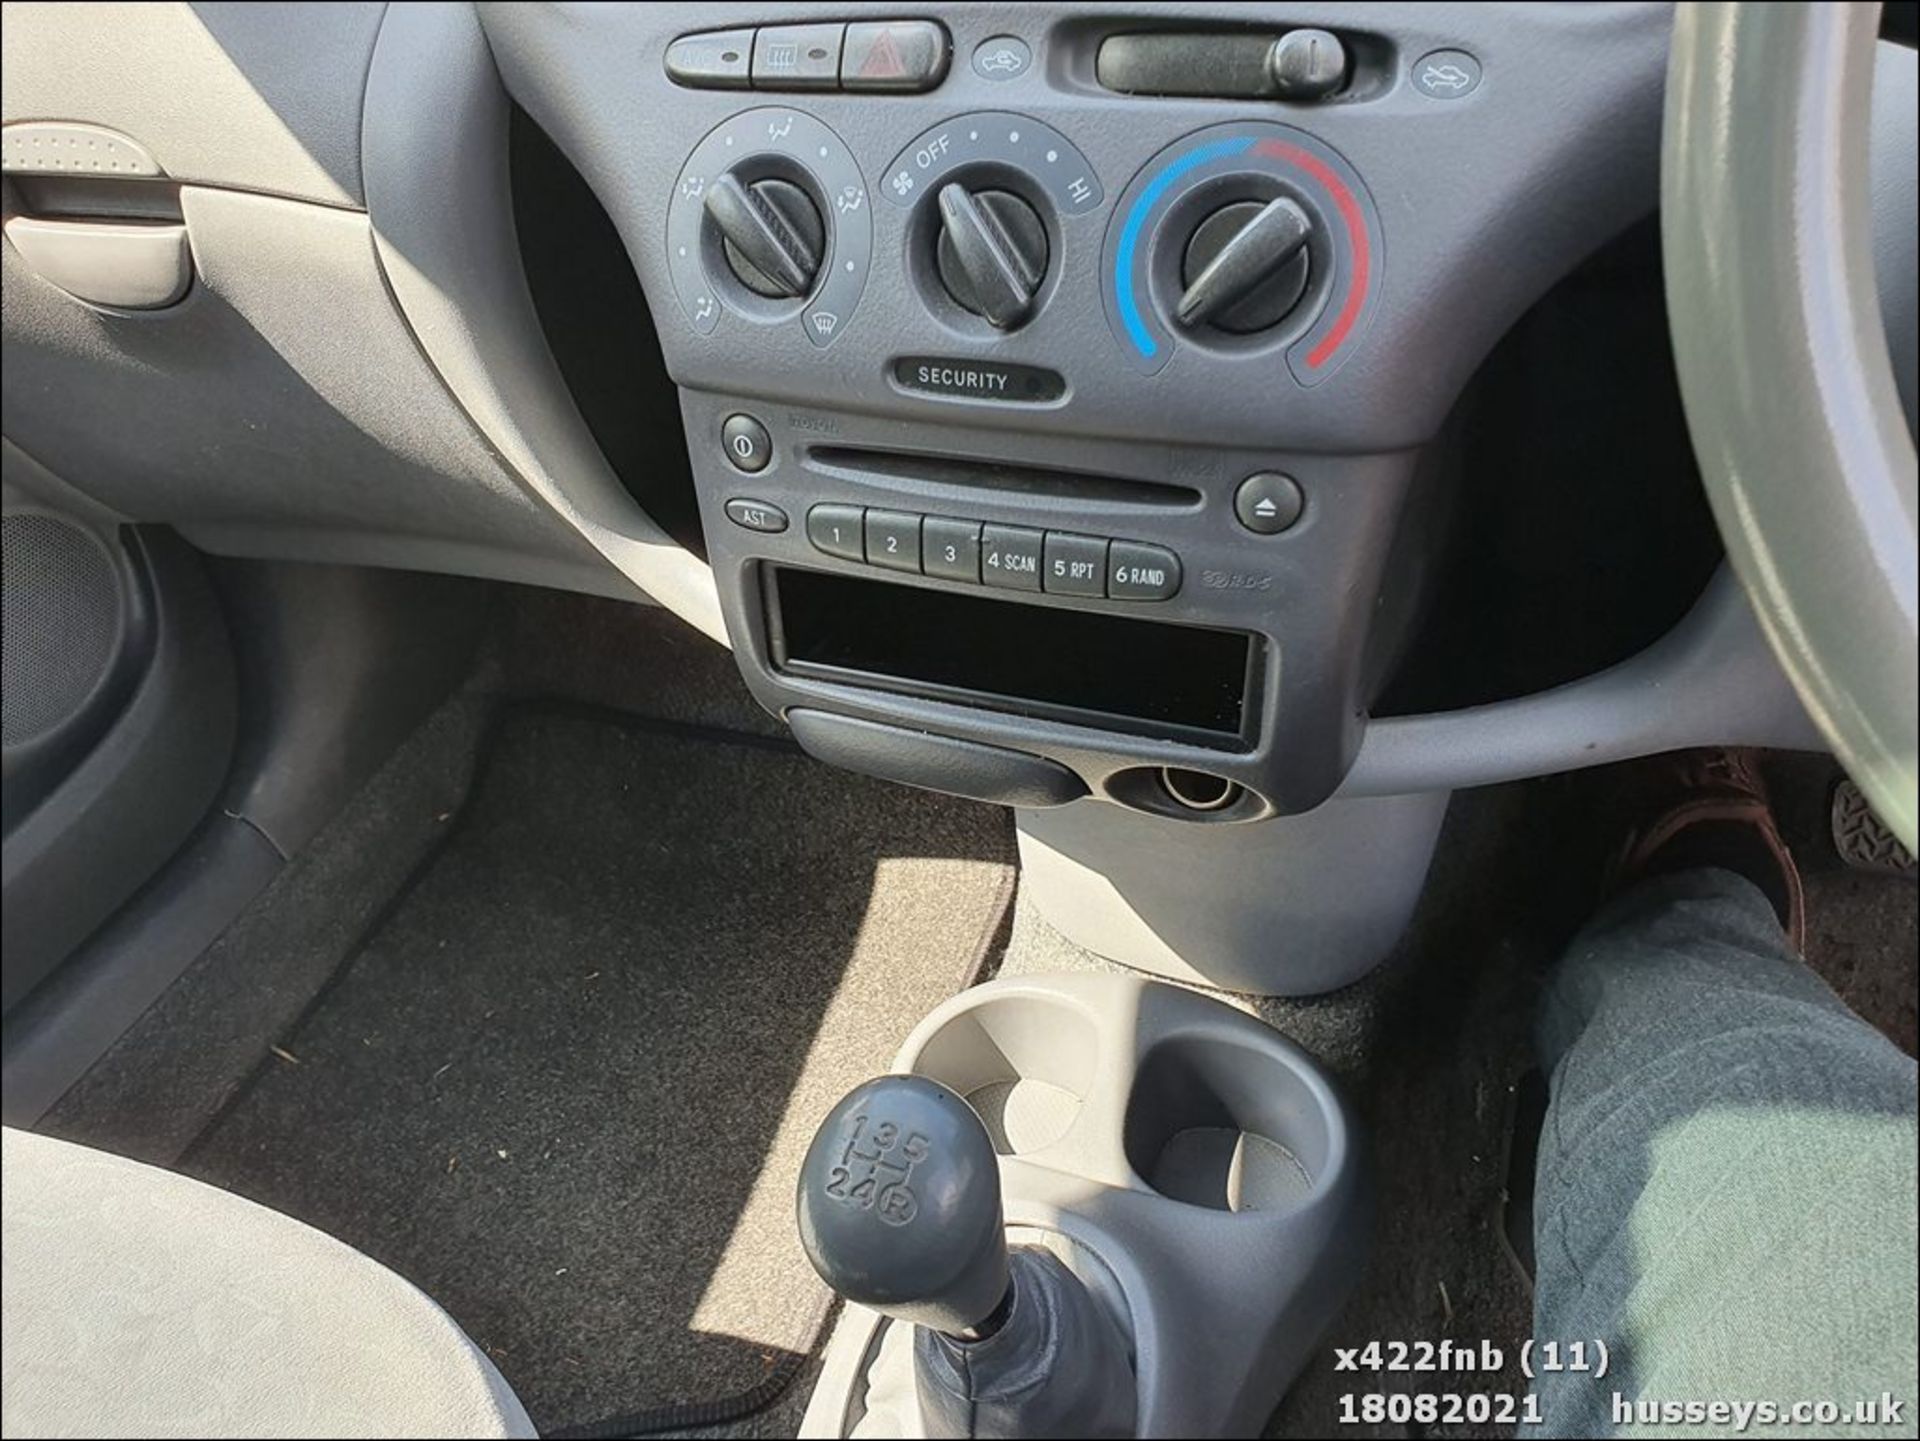 2001 TOYOTA YARIS CDX FREE-TRONIC - 998cc 5dr Hatchback (Silver, 77k) - Image 11 of 16